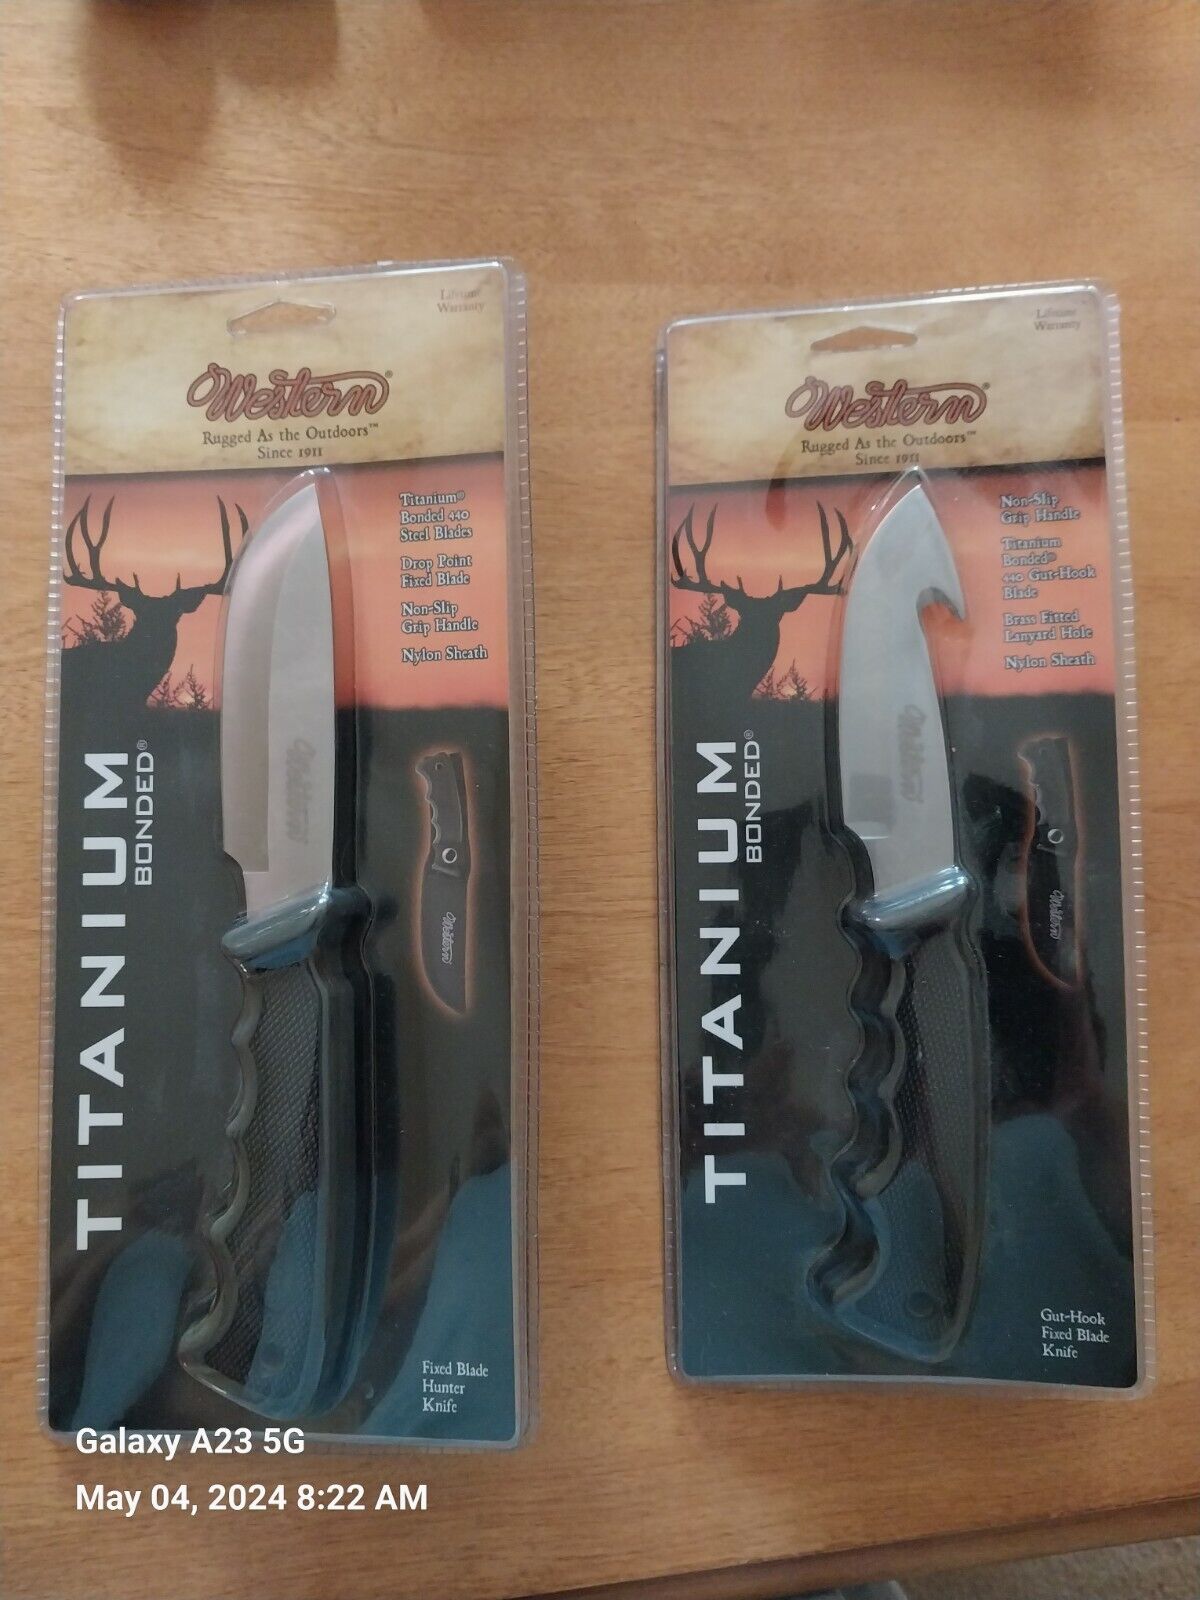  Lot of 2 Western USA Bonded Titanium 1 Hunting Knife & 1 Gut-Hook + Sheaths